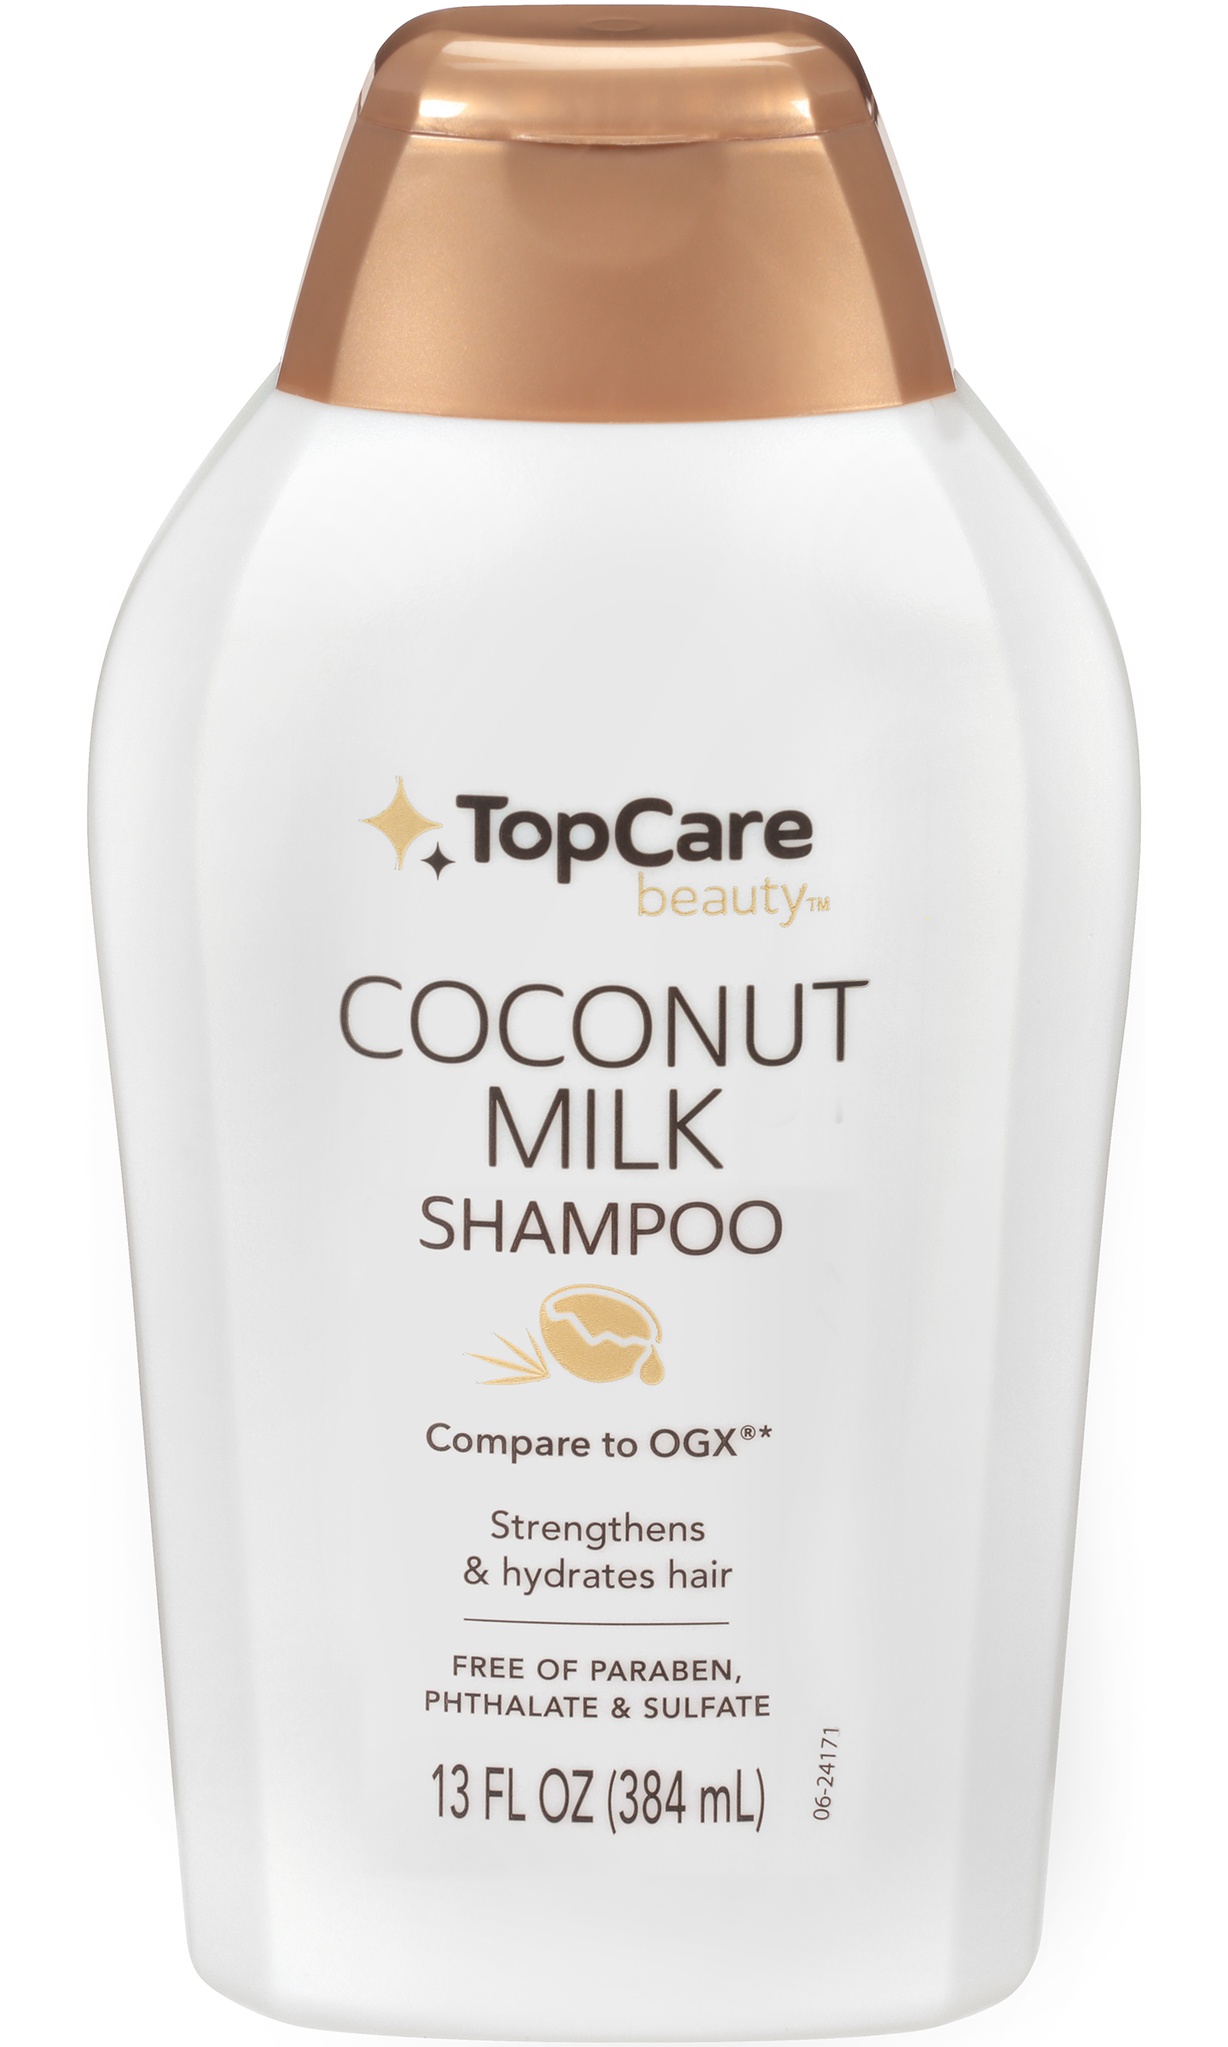 Top Care Coconut Milk Shampoo